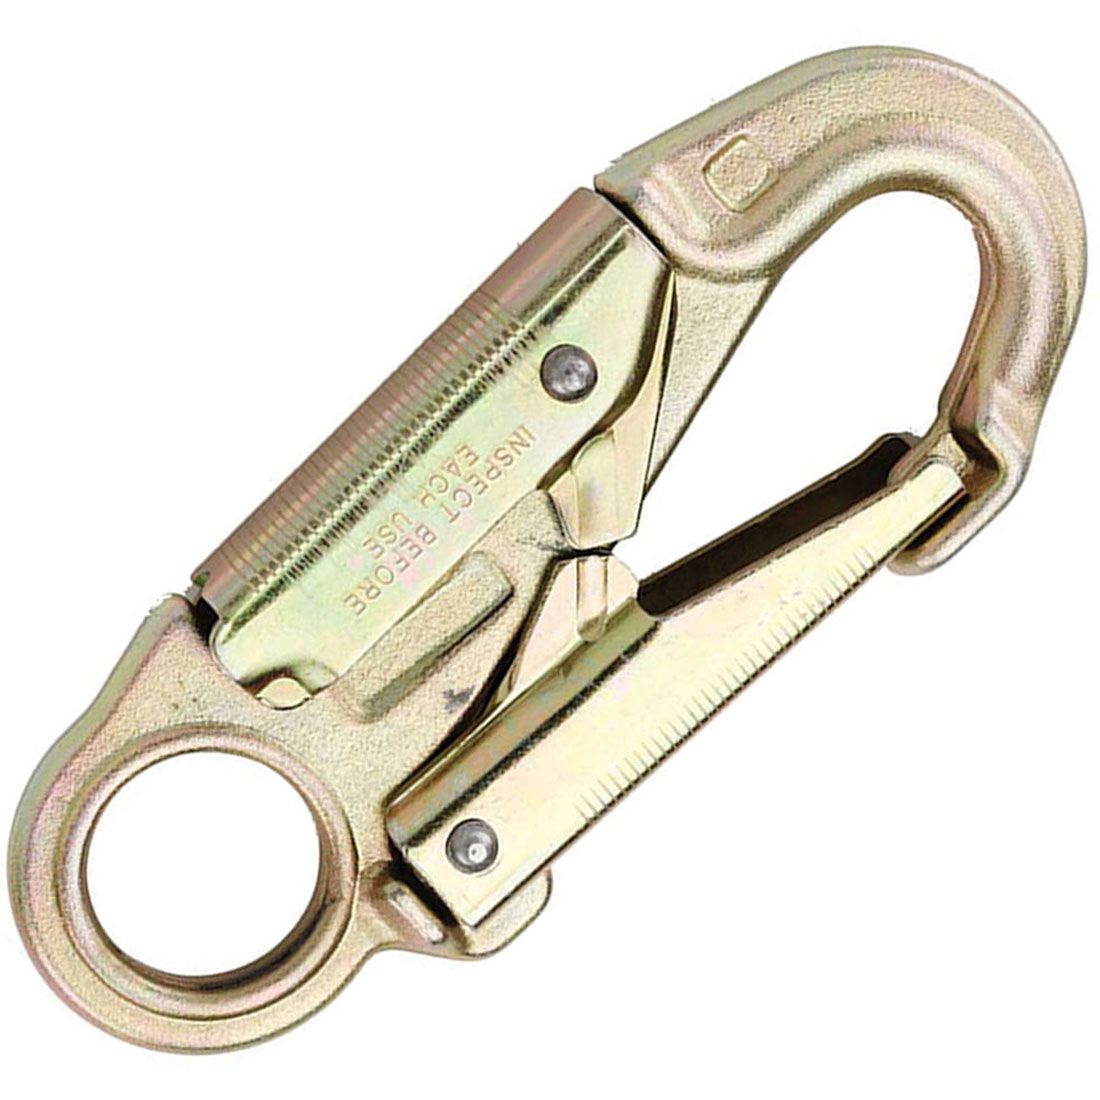 ProClimb Steel Rebar Hook - 2-Stage Locking (ANSI)